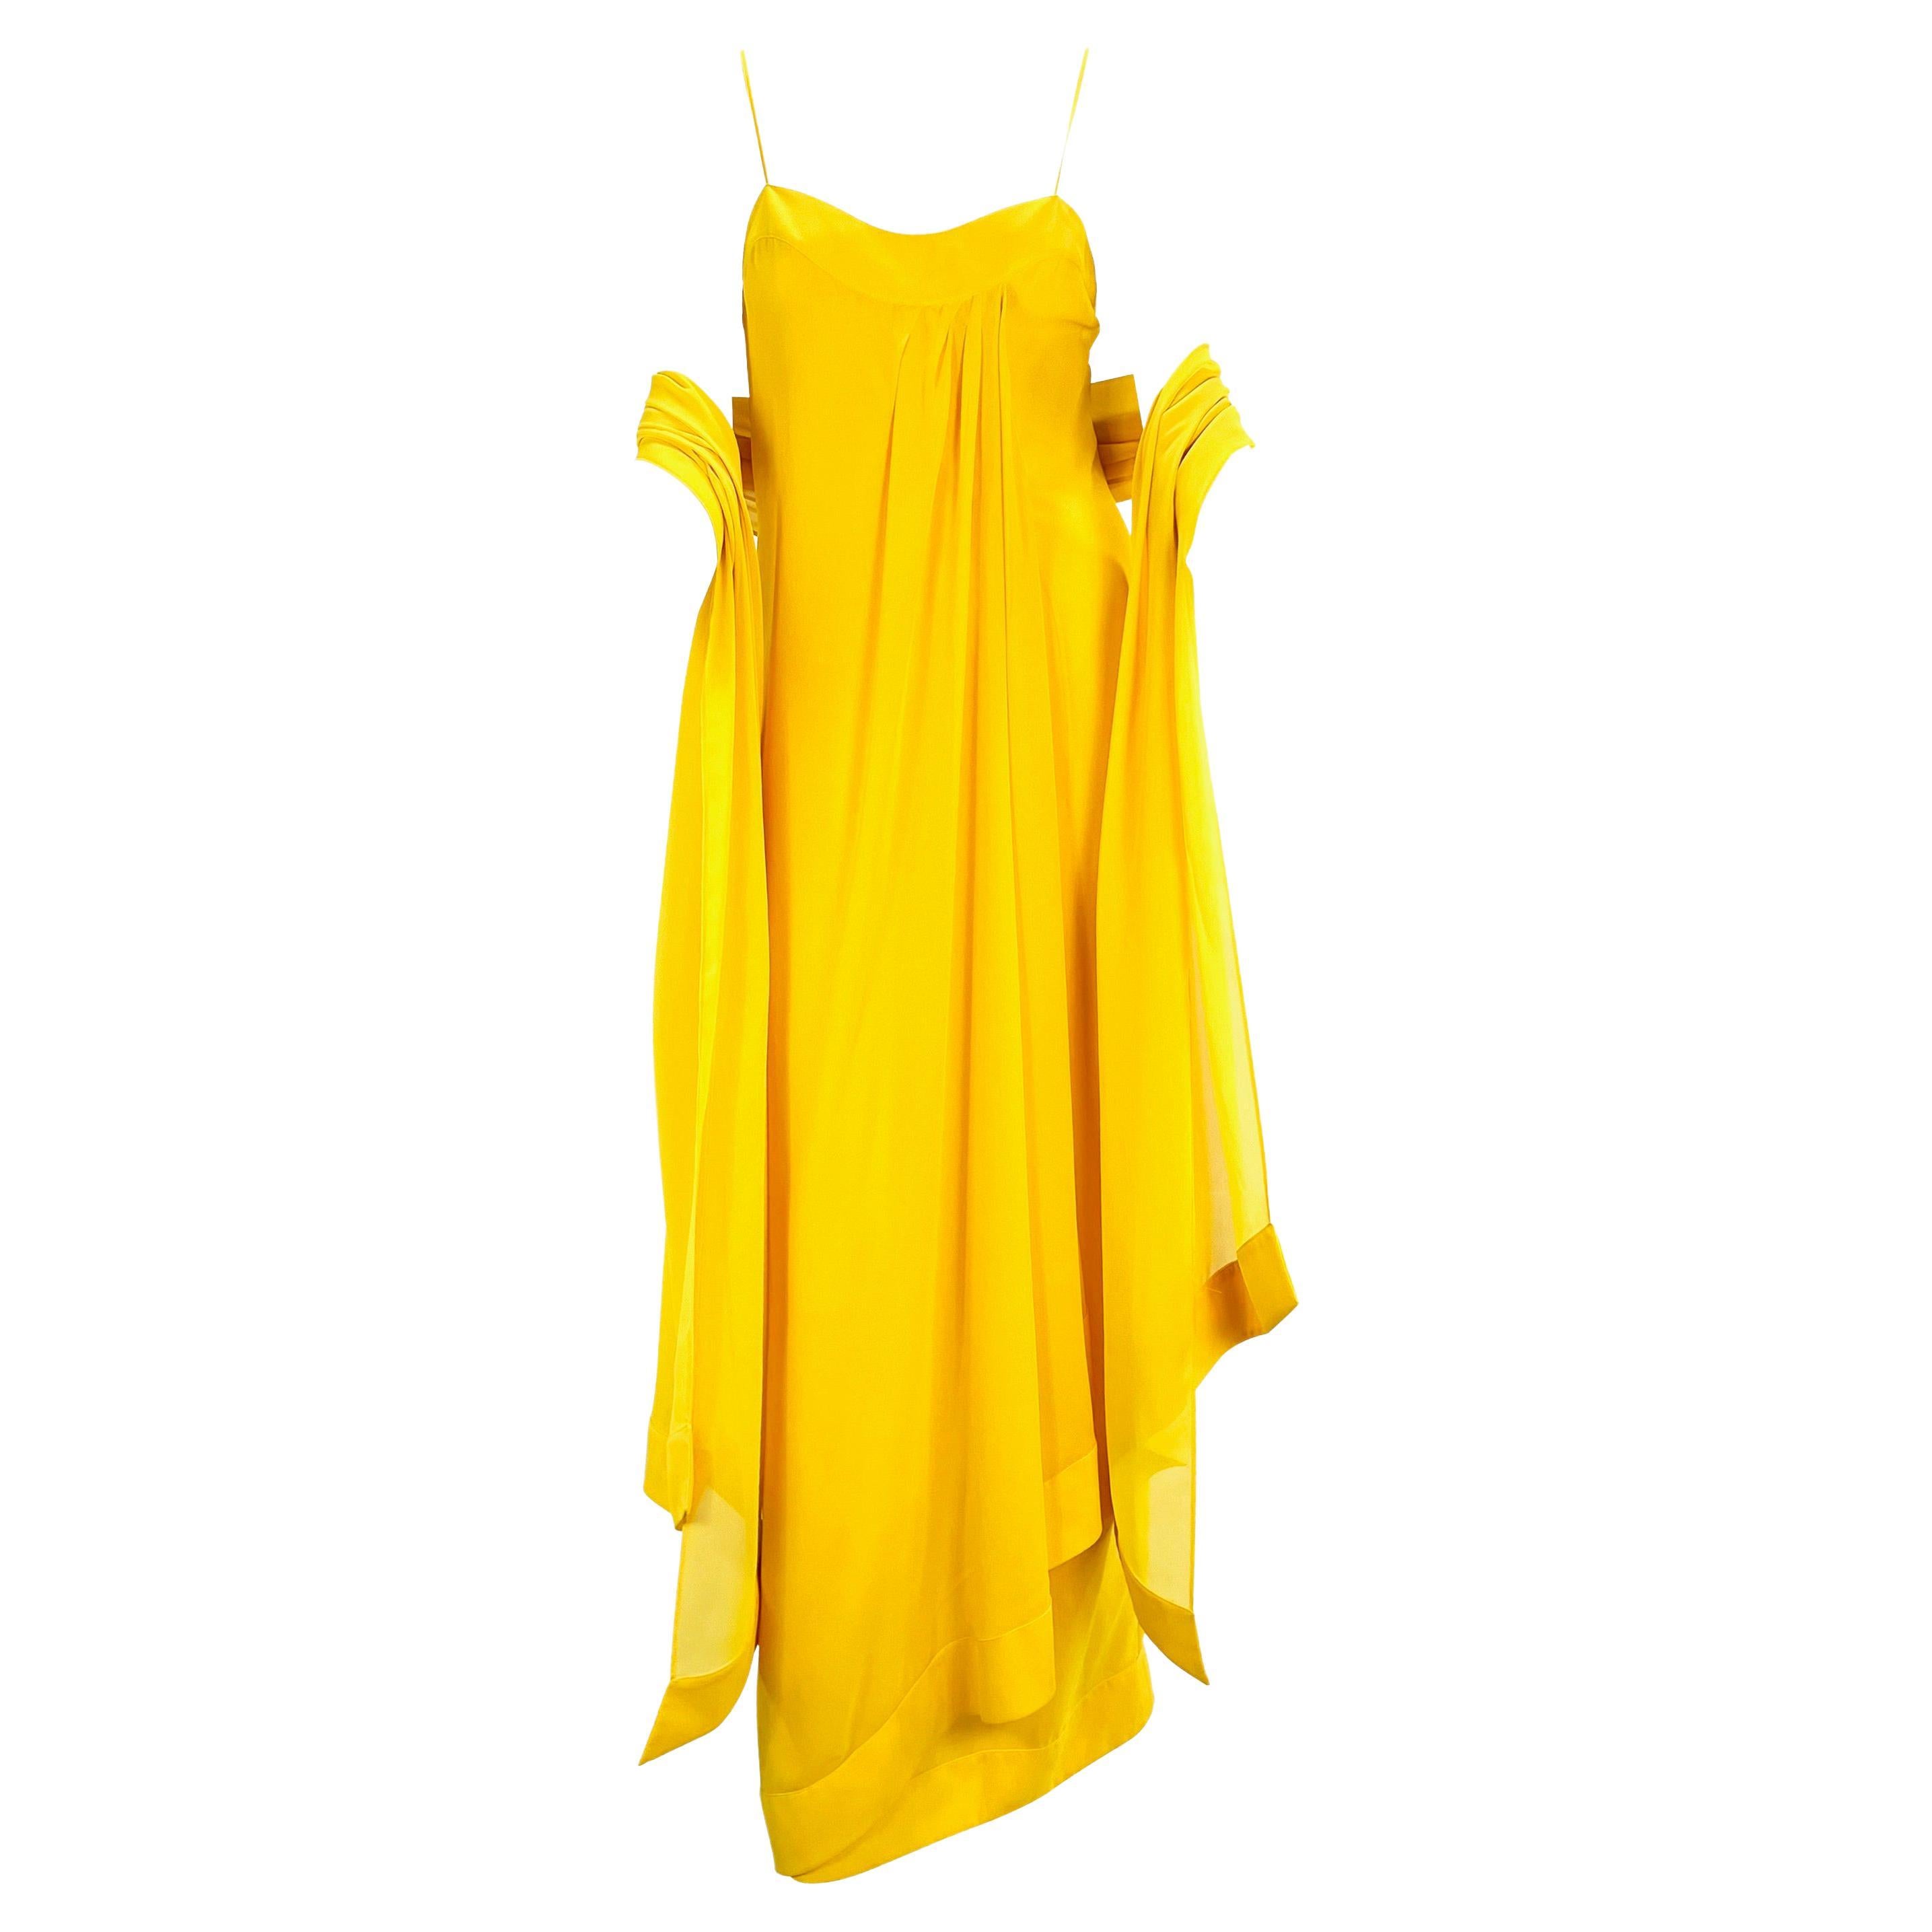 S/S 2000 Thierry Mugler Canary Yellow Chiffon Dress with Matching Shawl For Sale